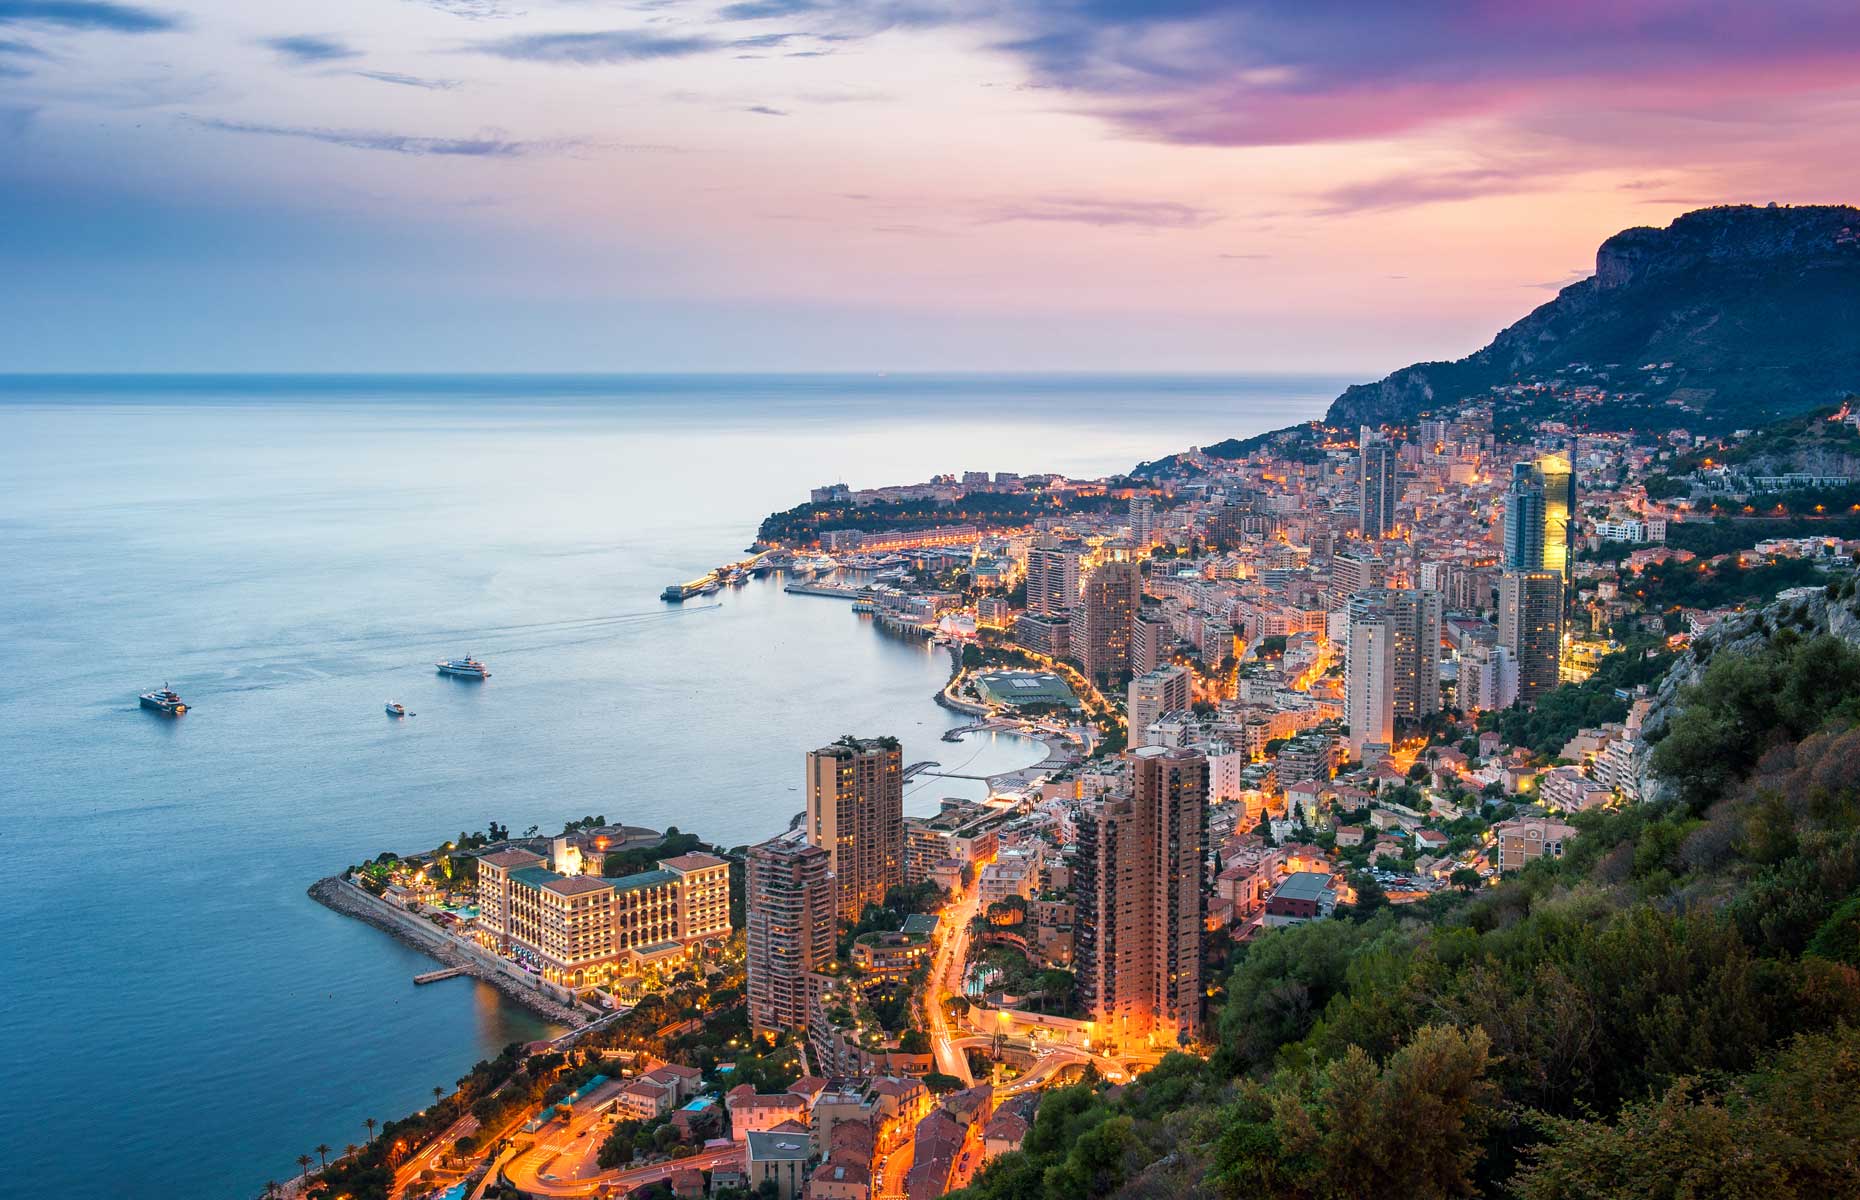 Monaco skyline in the evening (Image: Damiano Mariotti/Shutterstock)